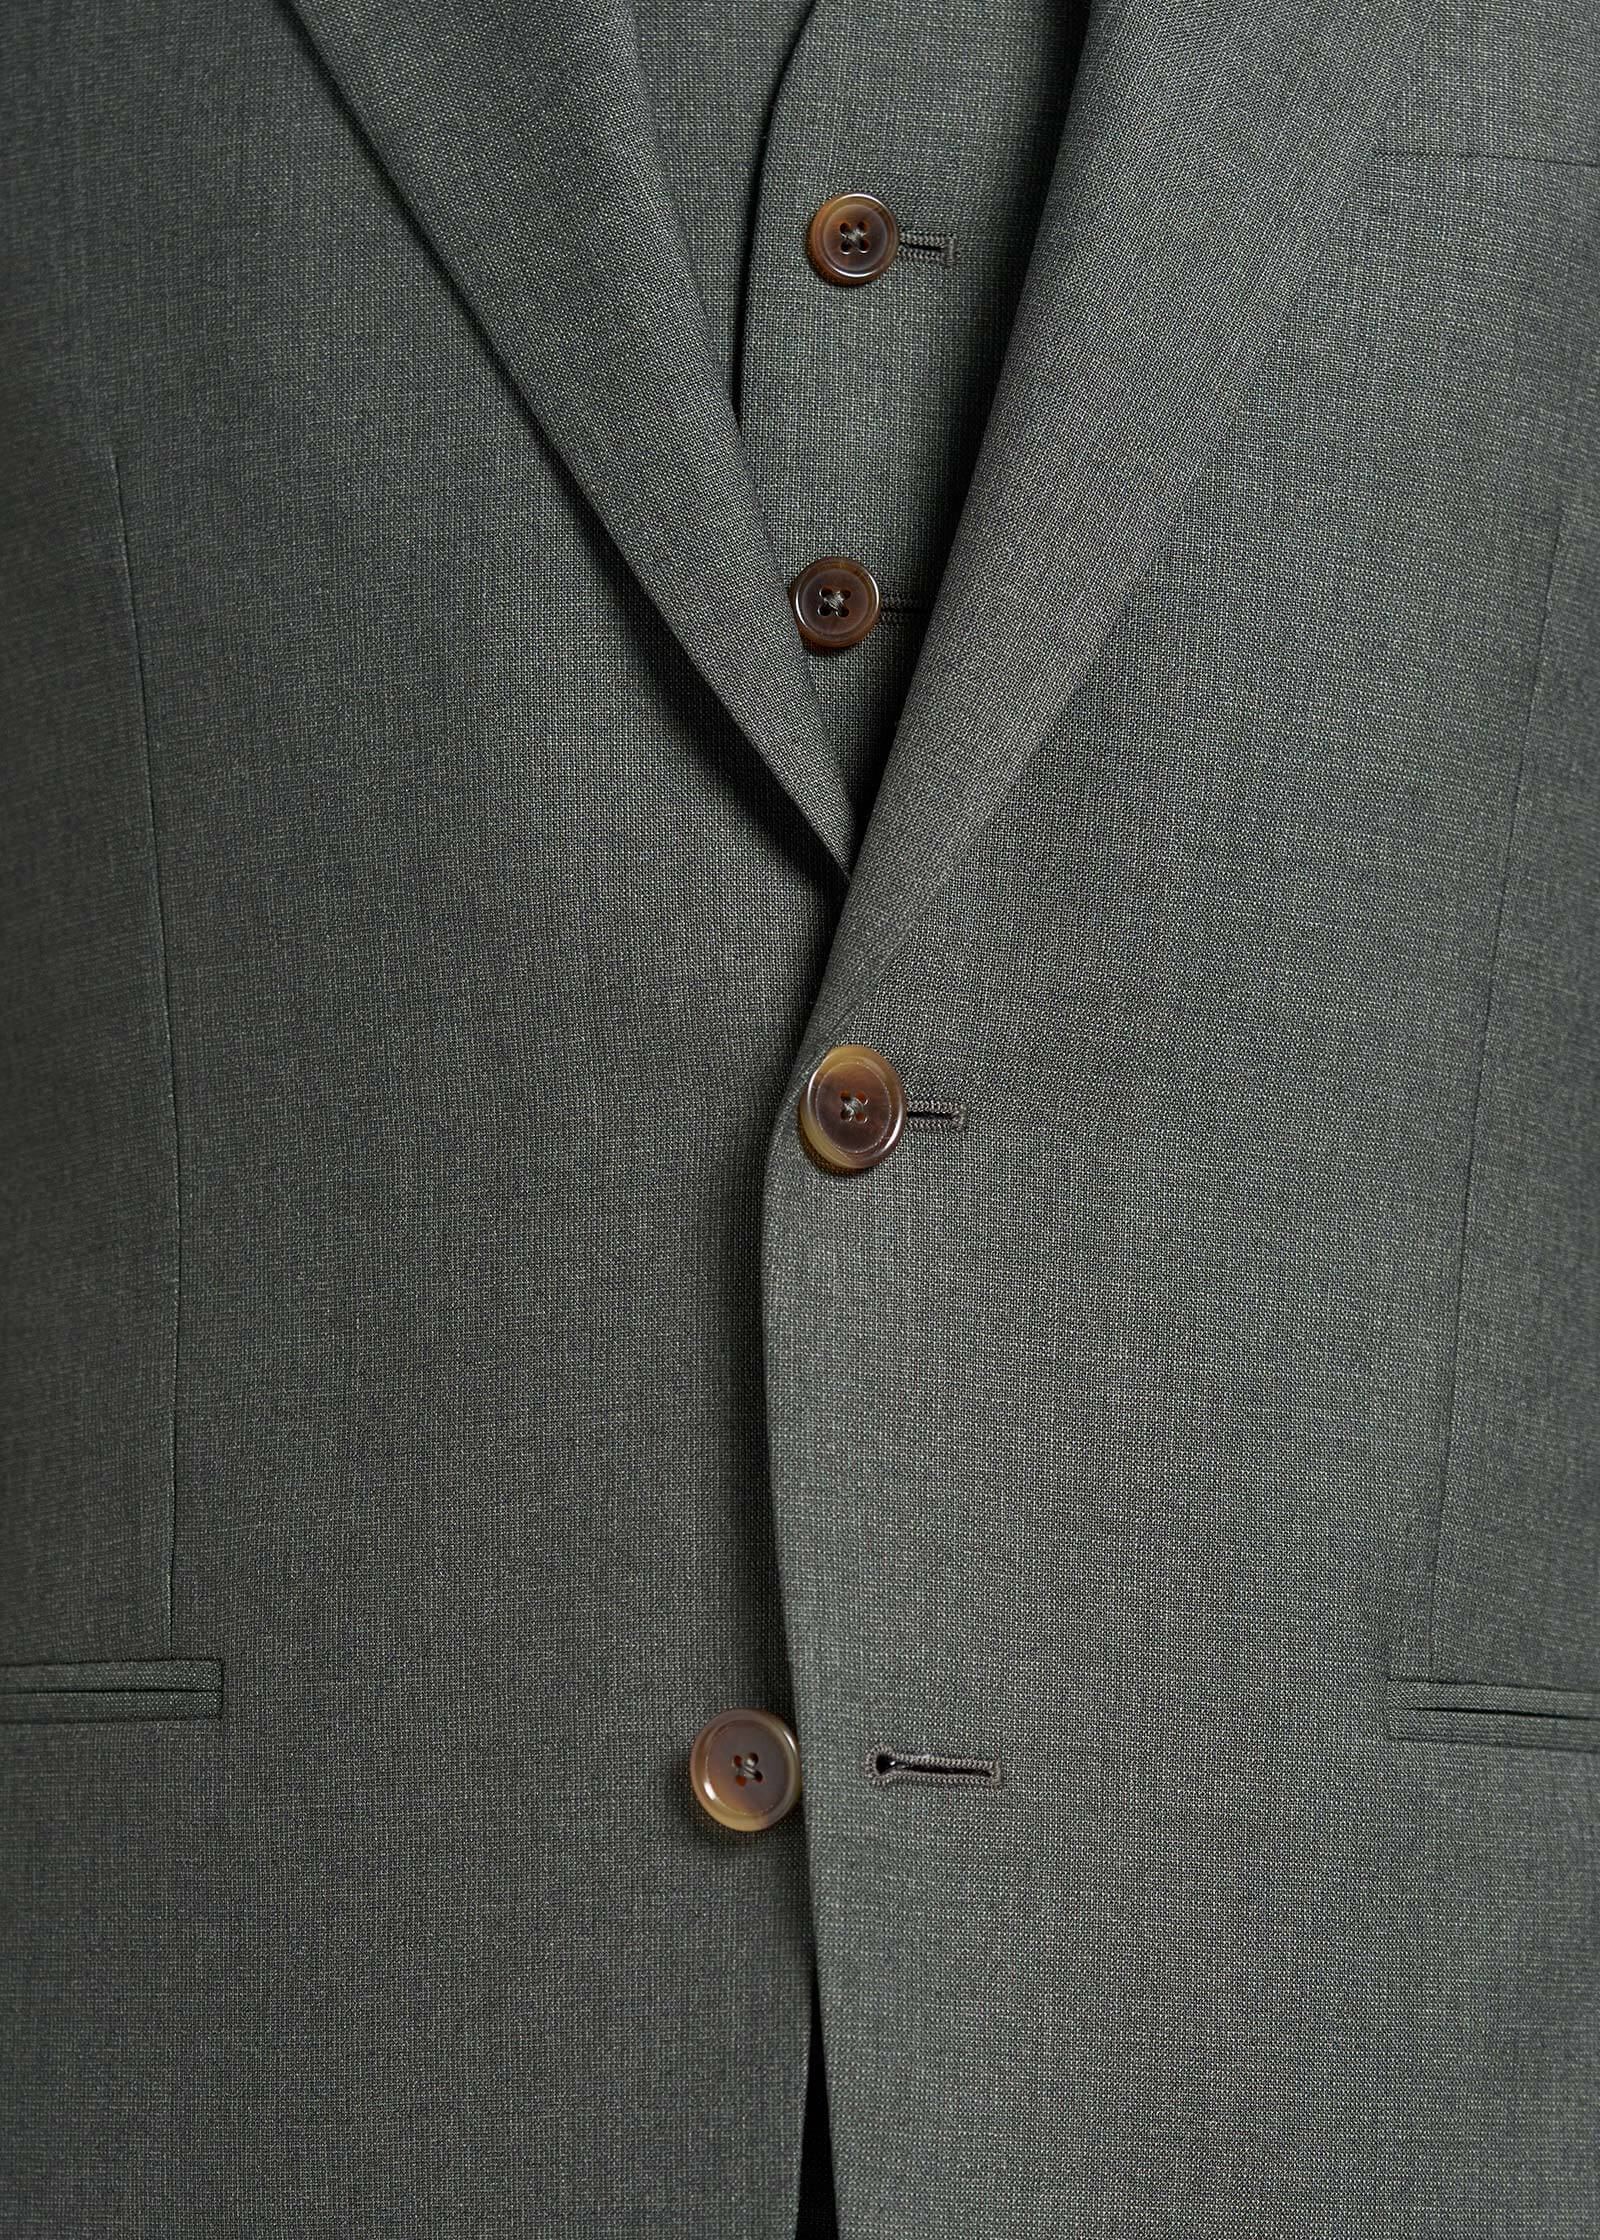 Green-Tropical-Mond-Custom-Suit-Details-close-up